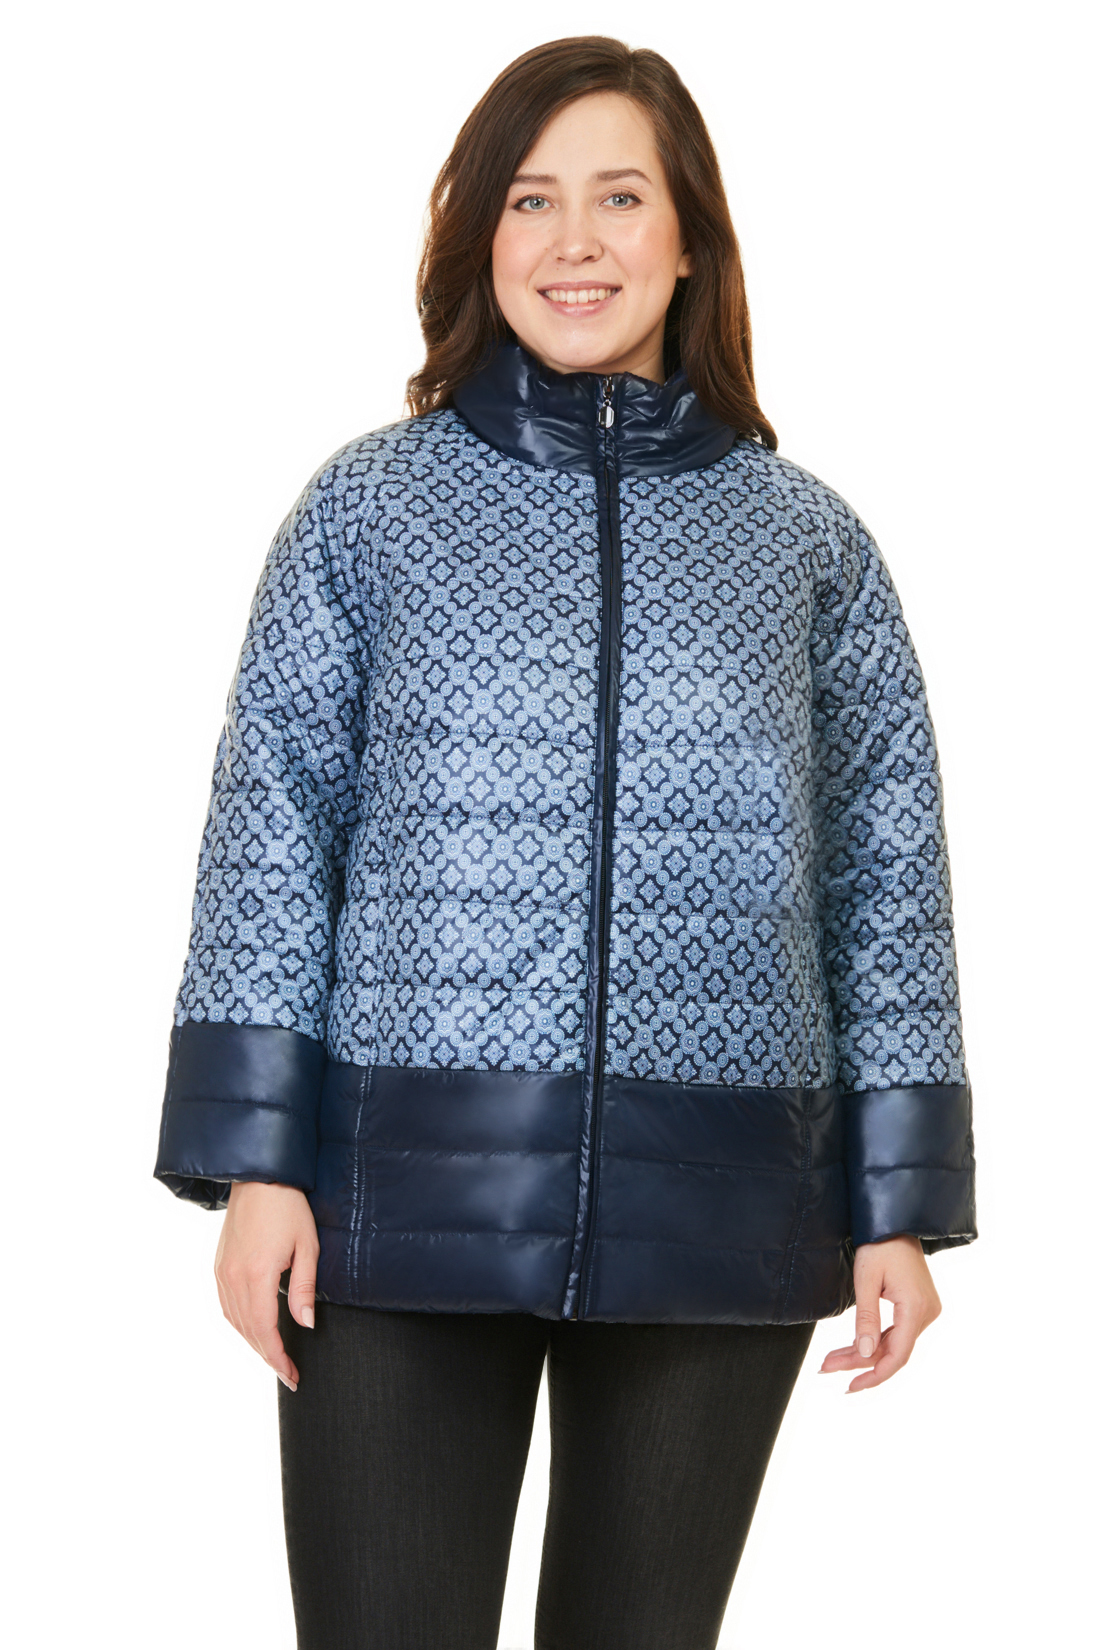 Куртка SIZE+ с орнаментом (арт. baon B037121), размер 56, цвет dark navy printed#синий Куртка SIZE+ с орнаментом (арт. baon B037121) - фото 1